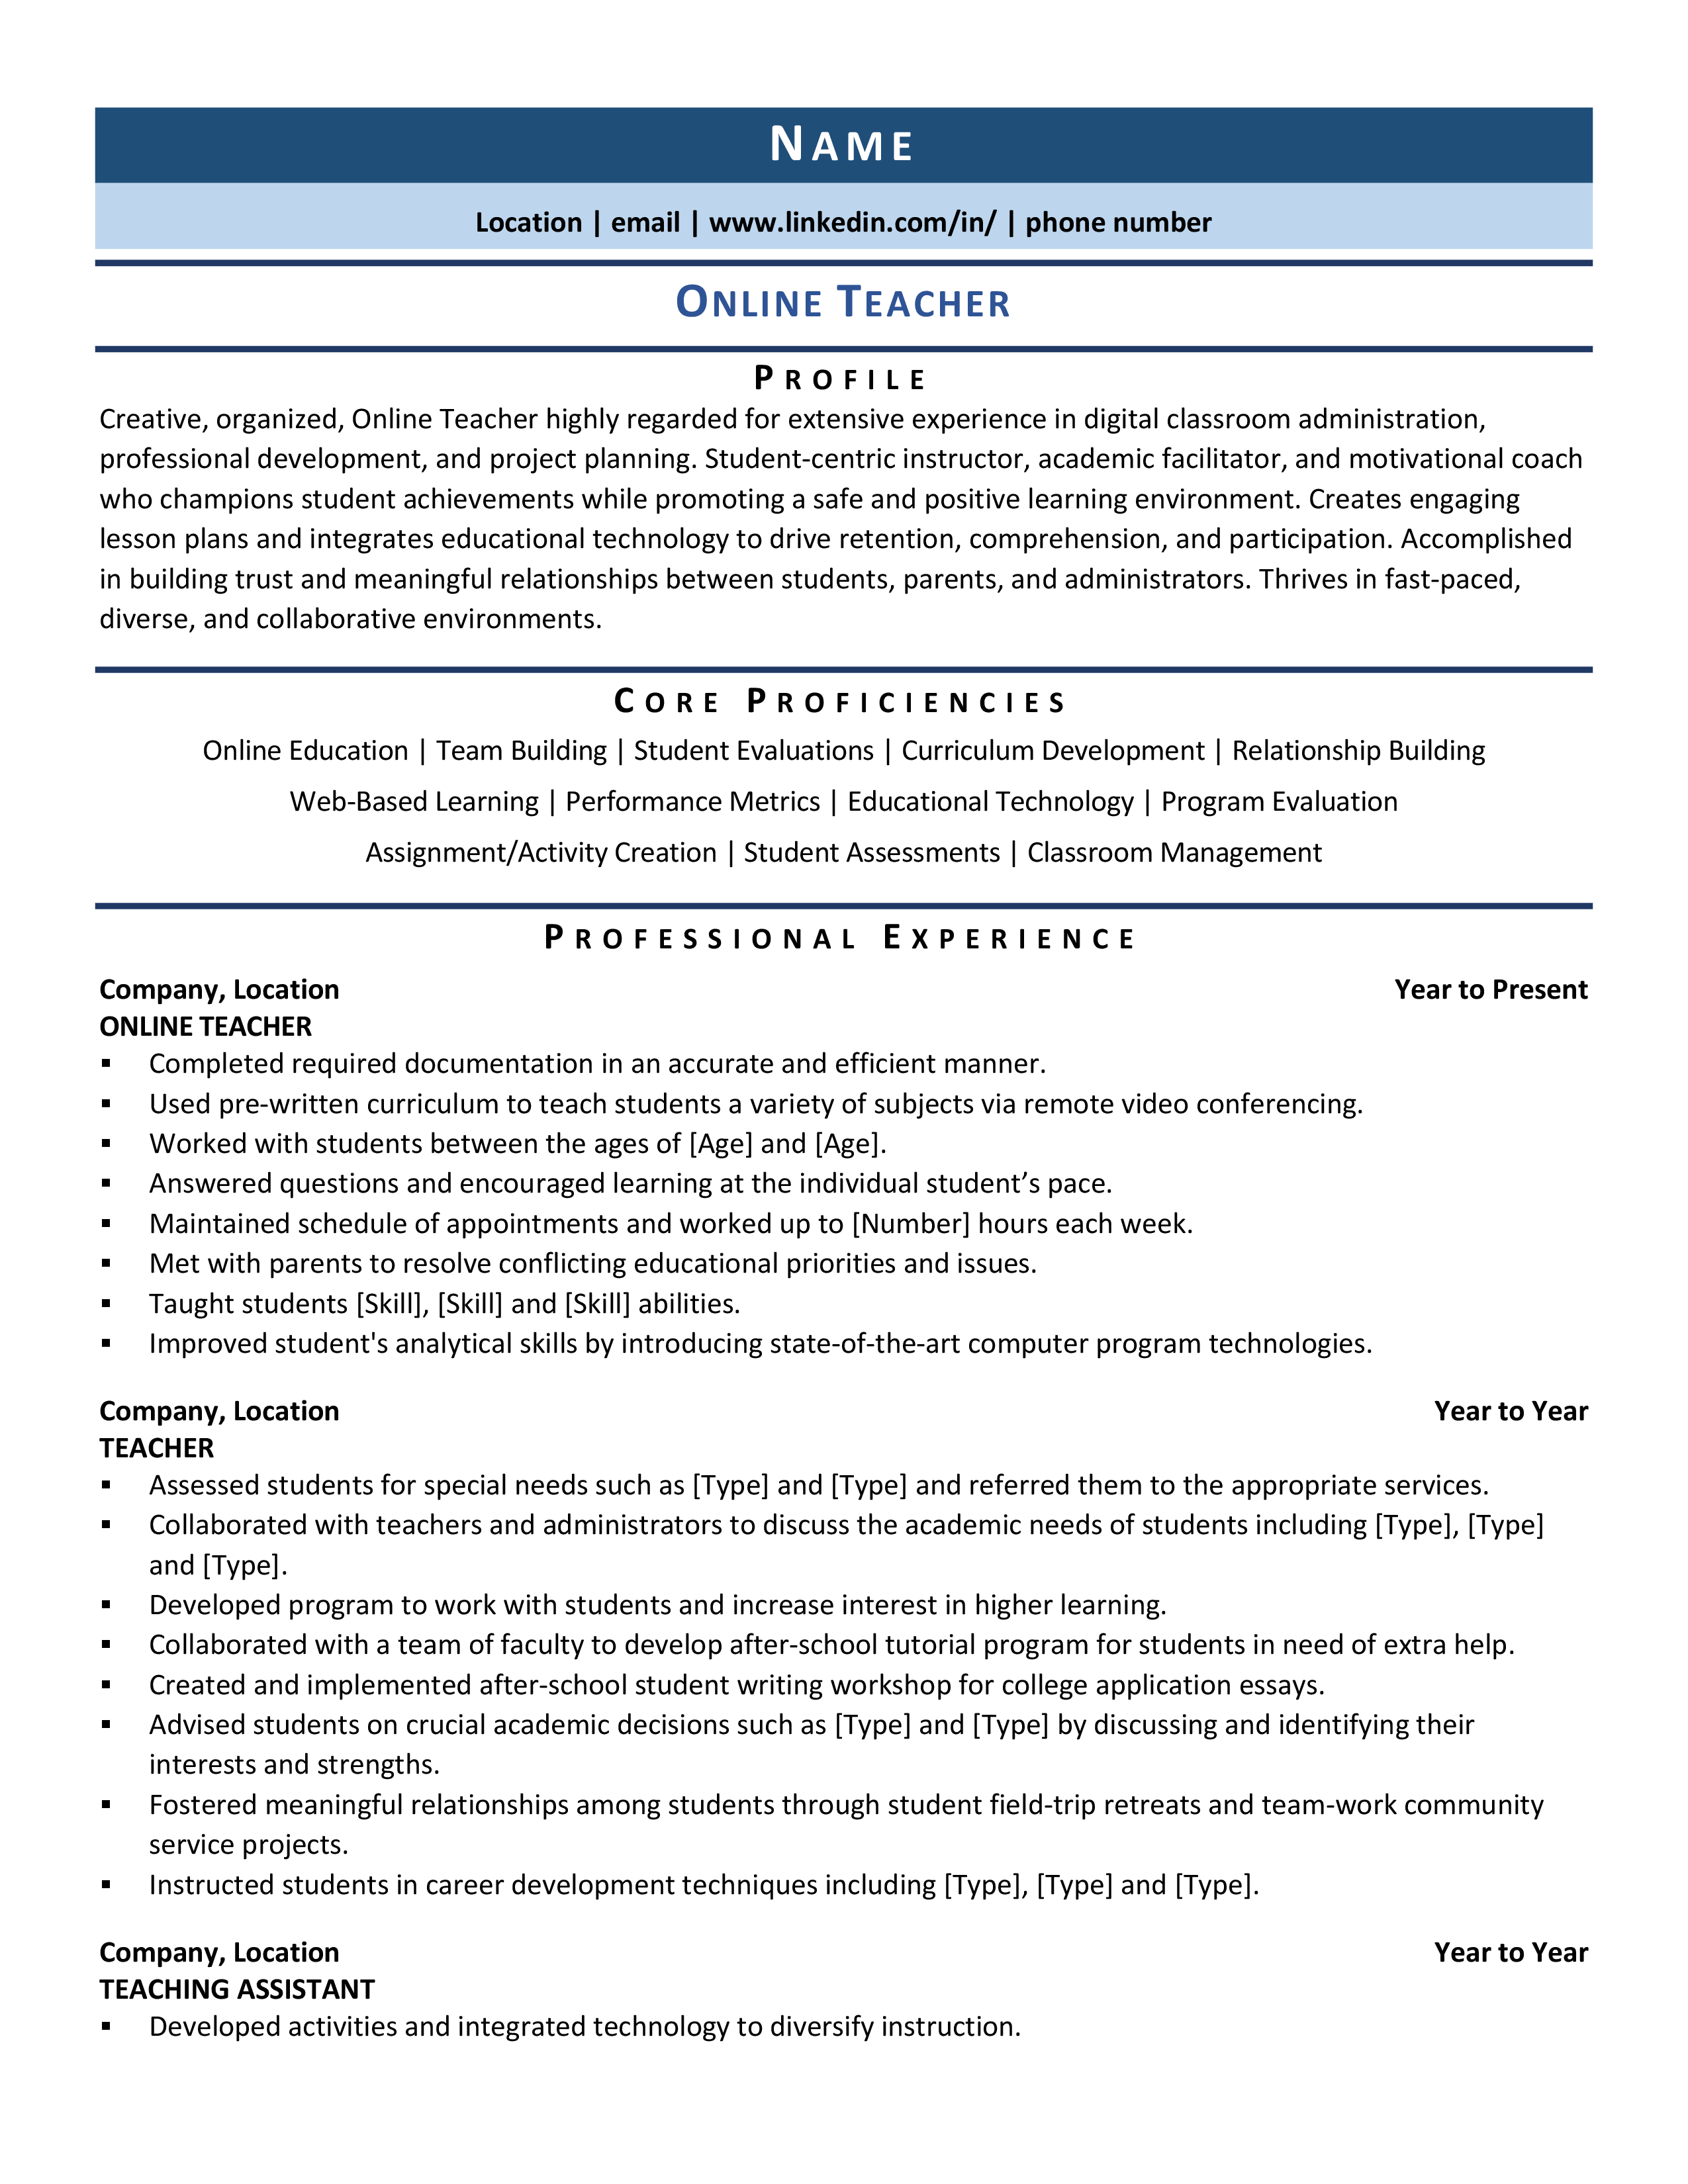 free professional resume templates for educators